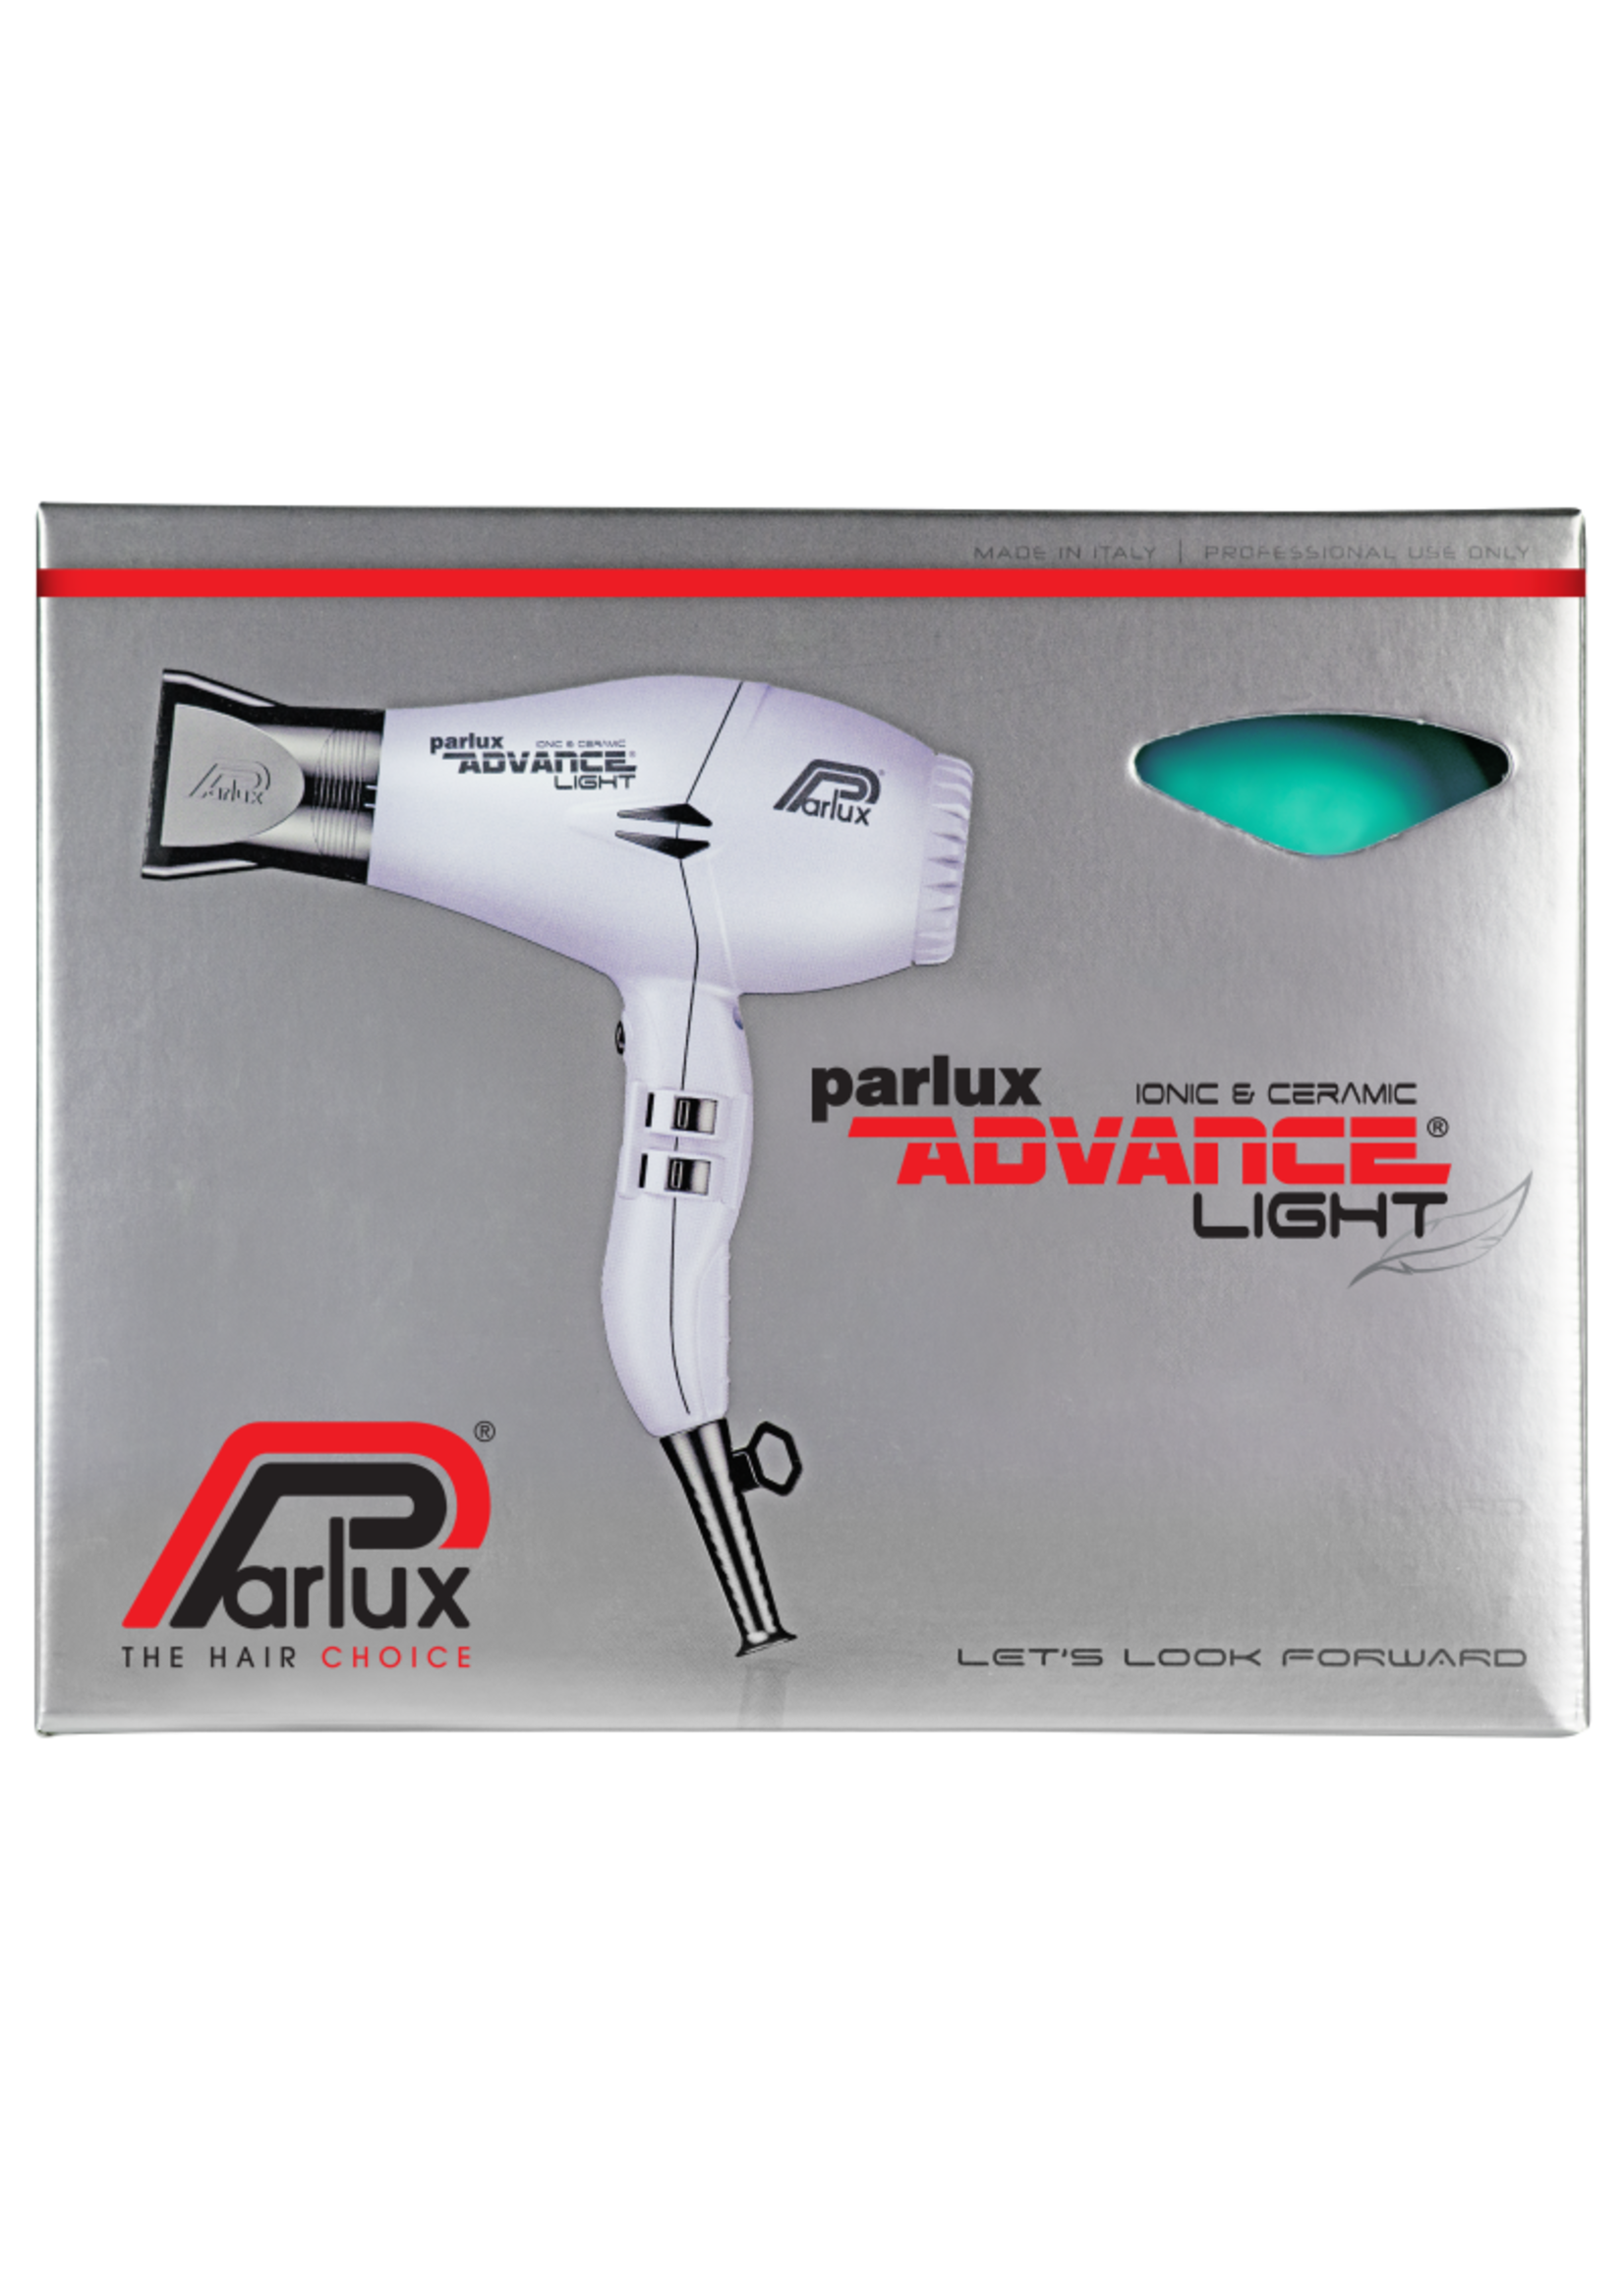 Parlux Parlux Advance Light Ceramic & Ionic Hair Dryer 2200W - Aqua